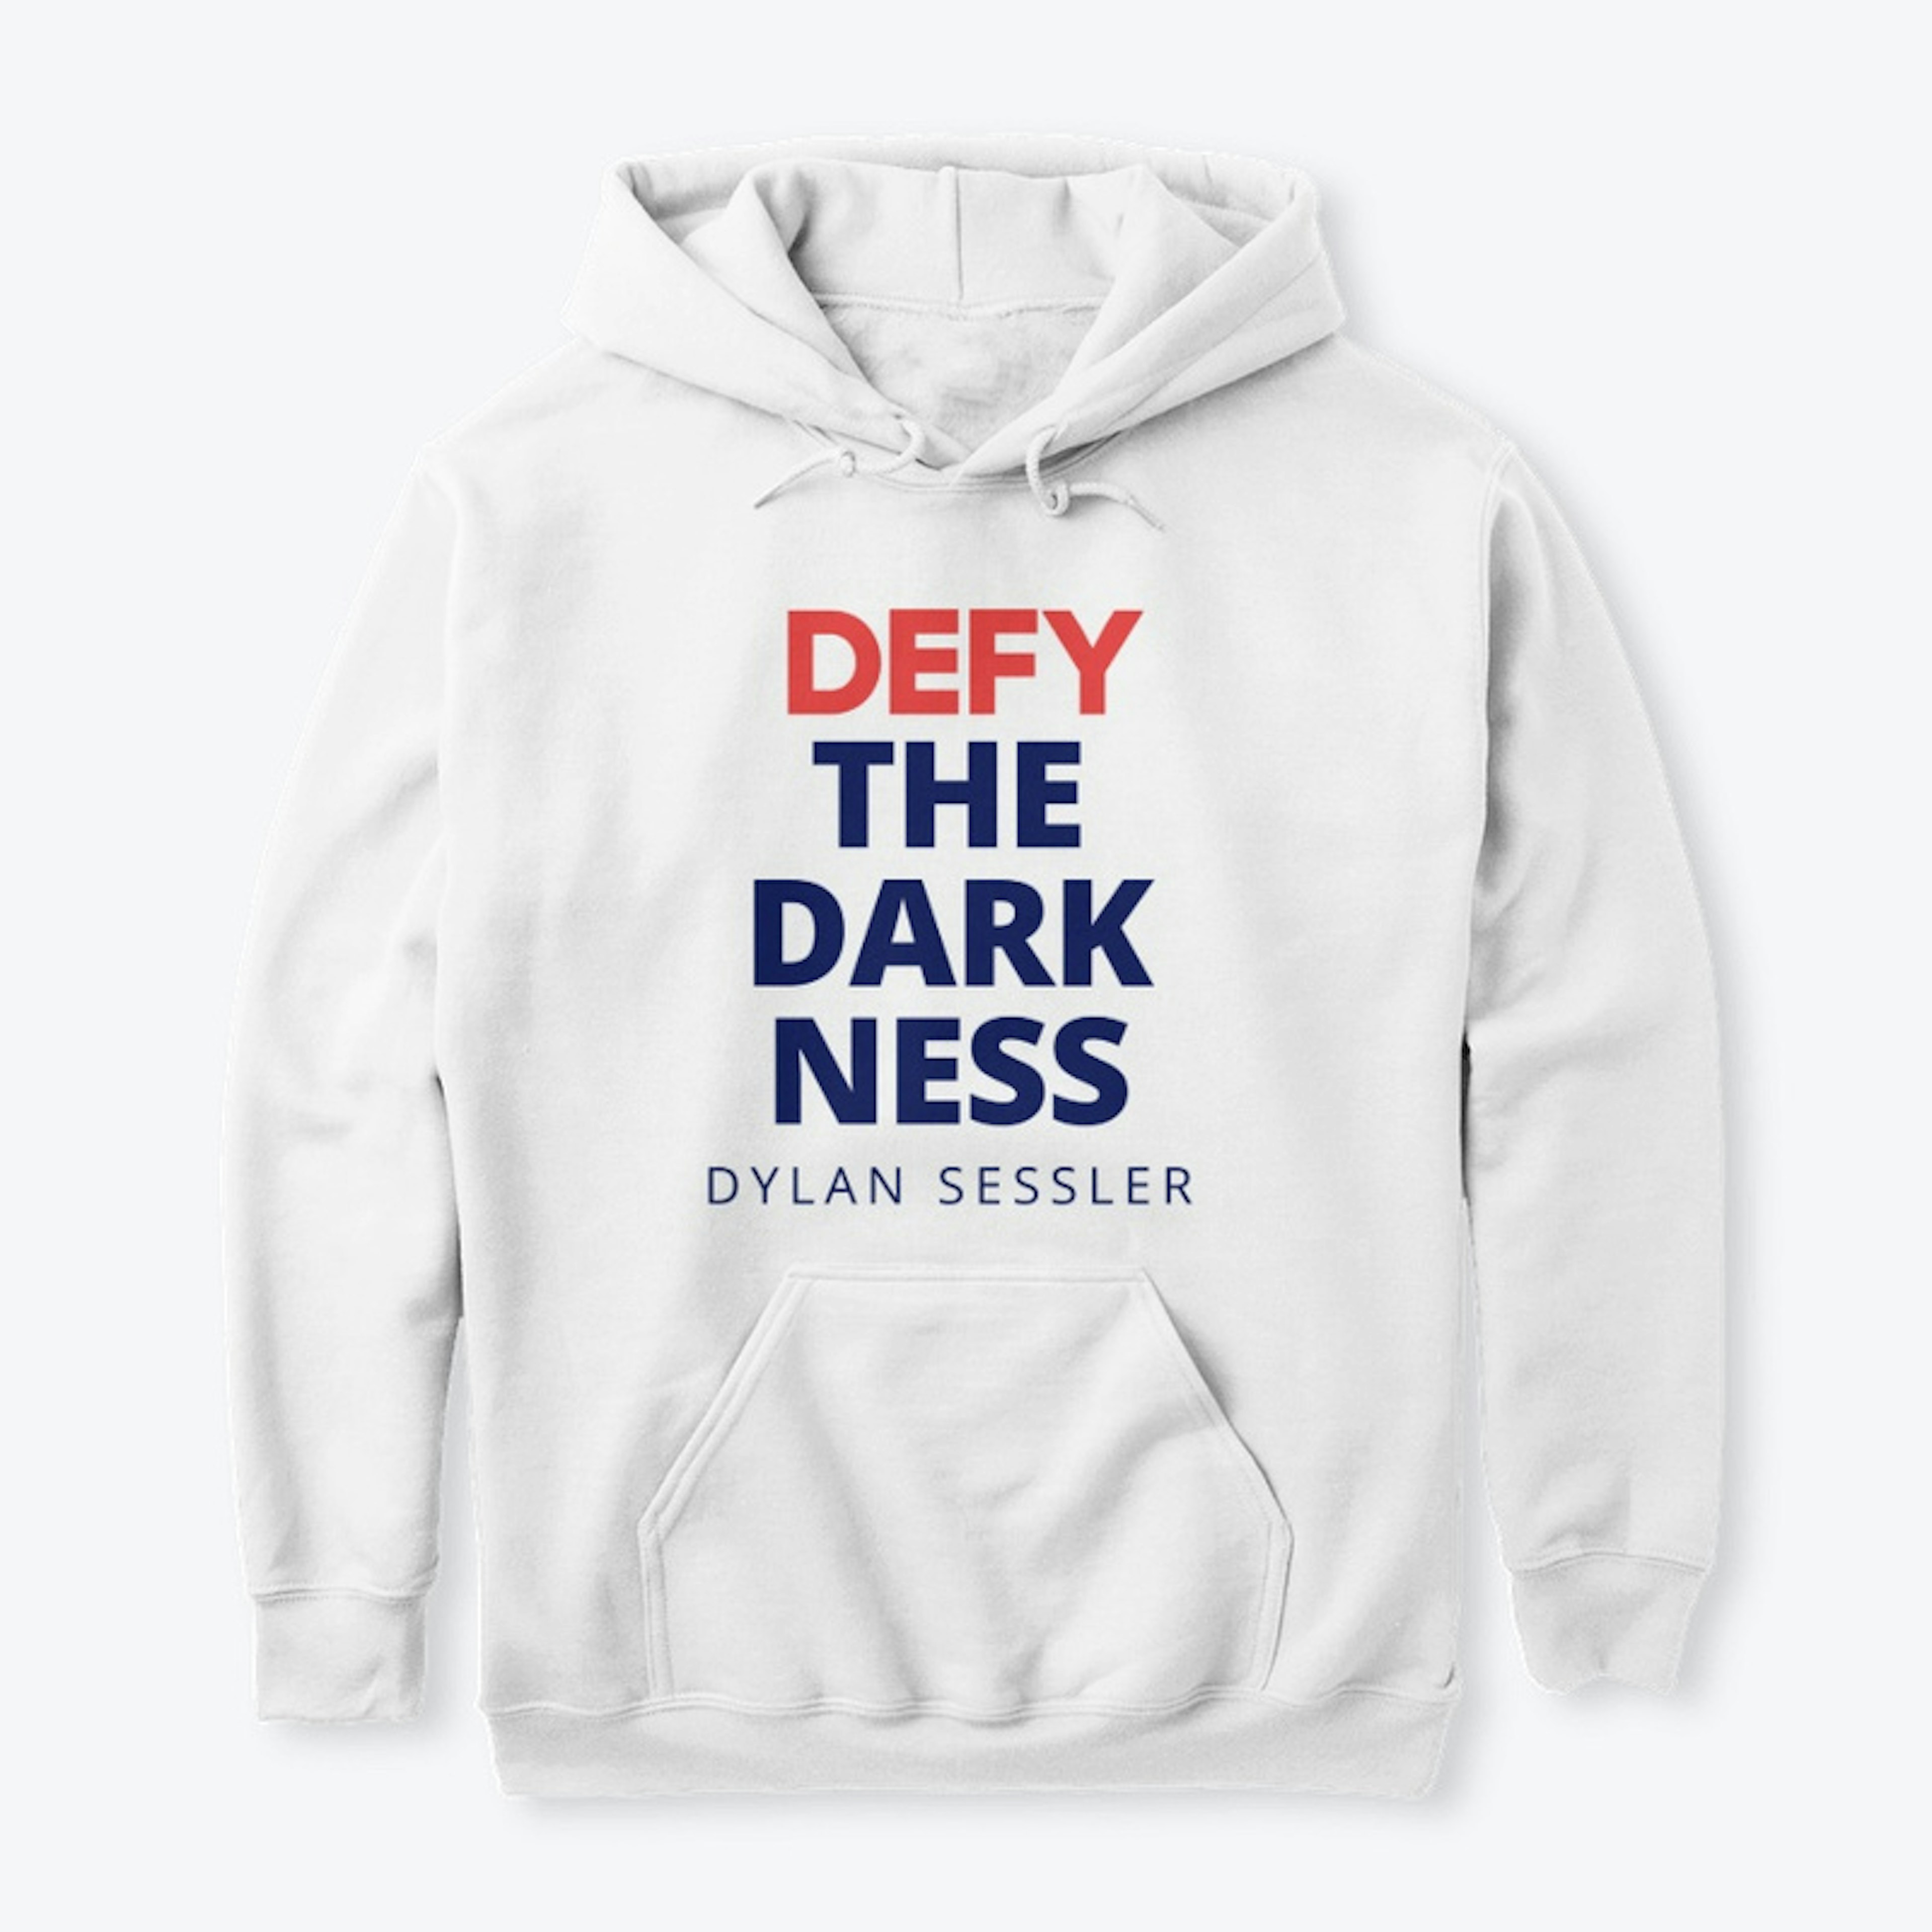 Defy the Dakness by Dylan Sessler